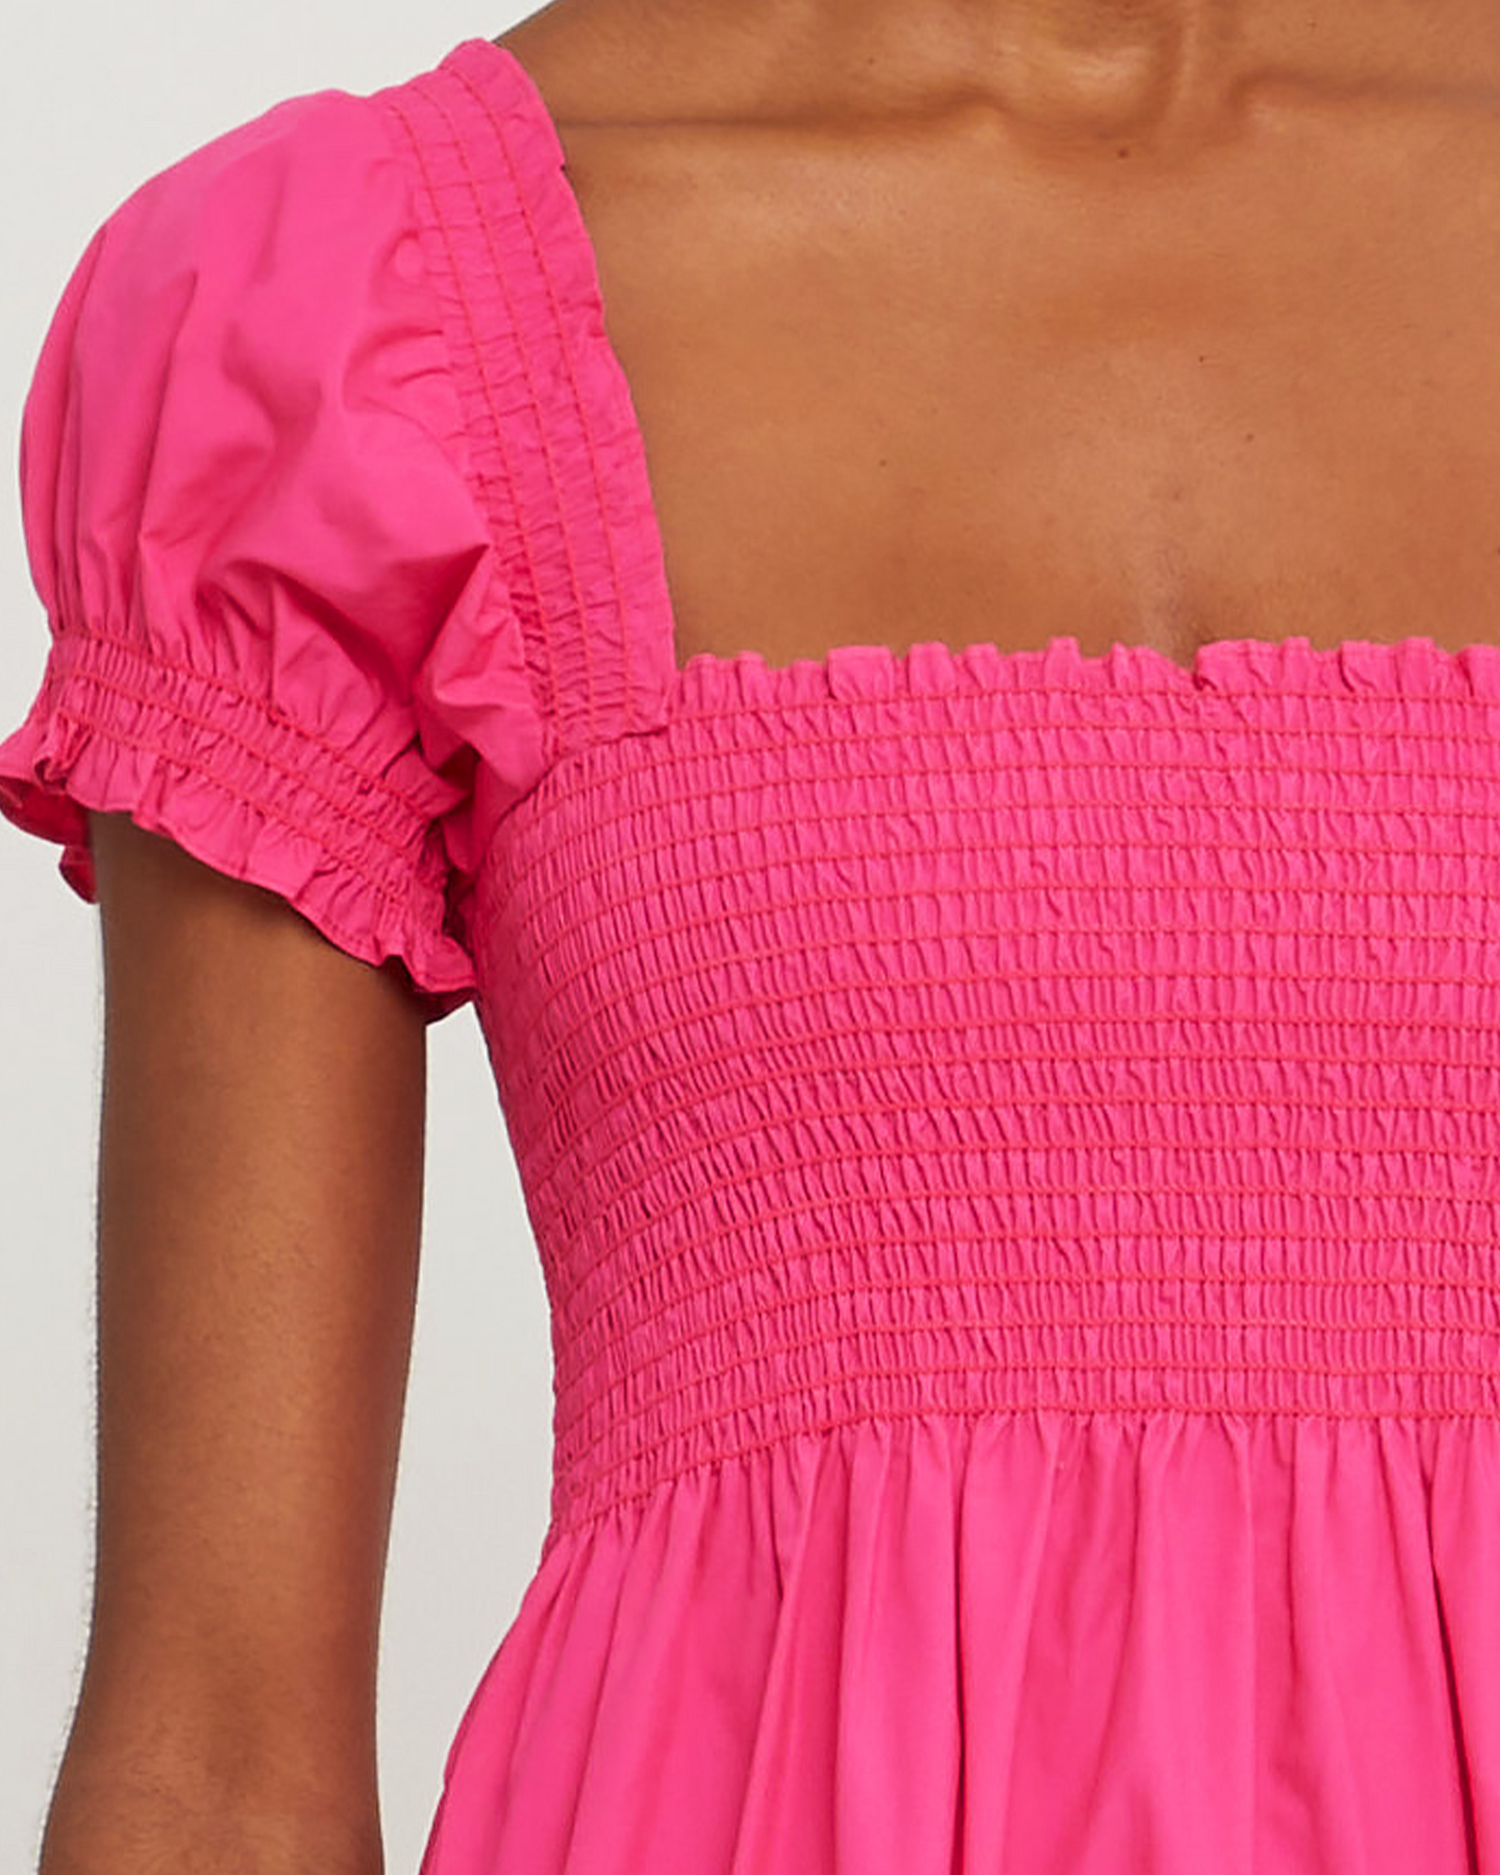 Sixth image of Square Neck Smocked Maxi Dress, a pink maxi dress, smocked, puff sleeves, short sleeves